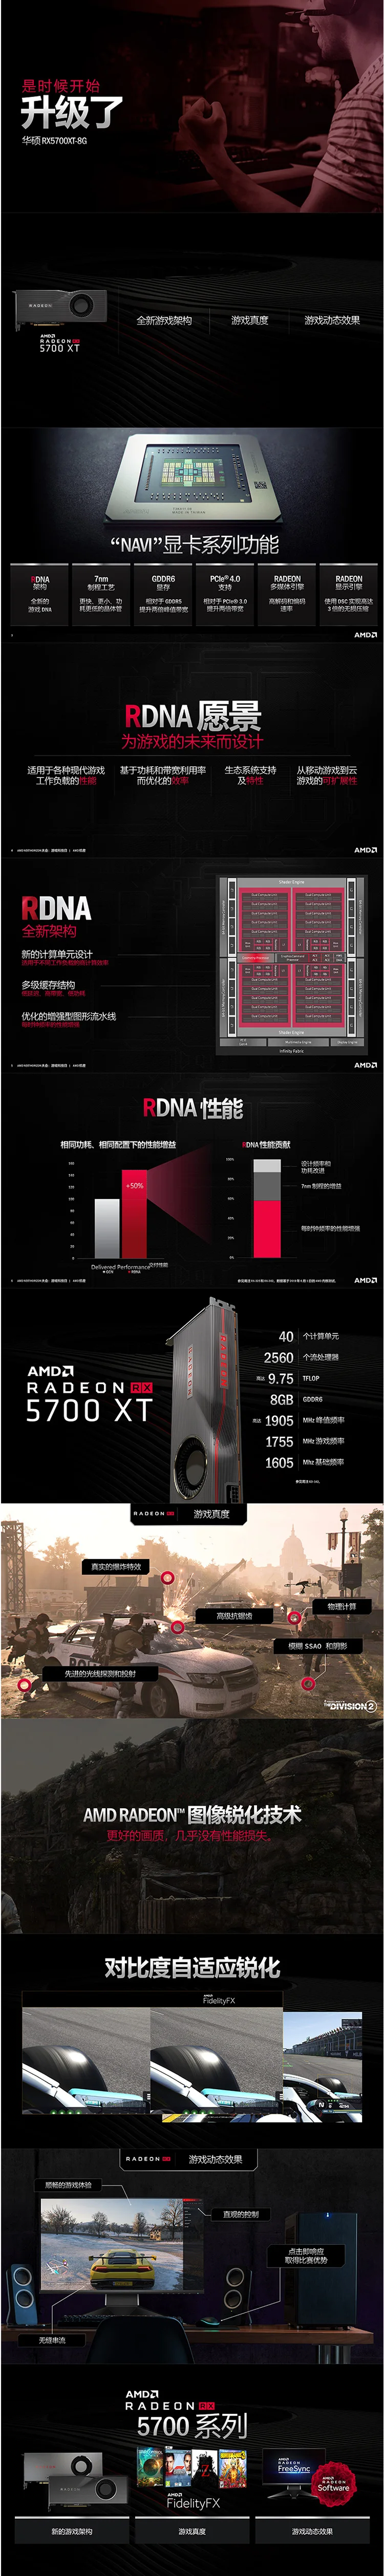 Игровая графика ASUS Radeon RX 5700 7nm RDNA architecture 8G GDDR6